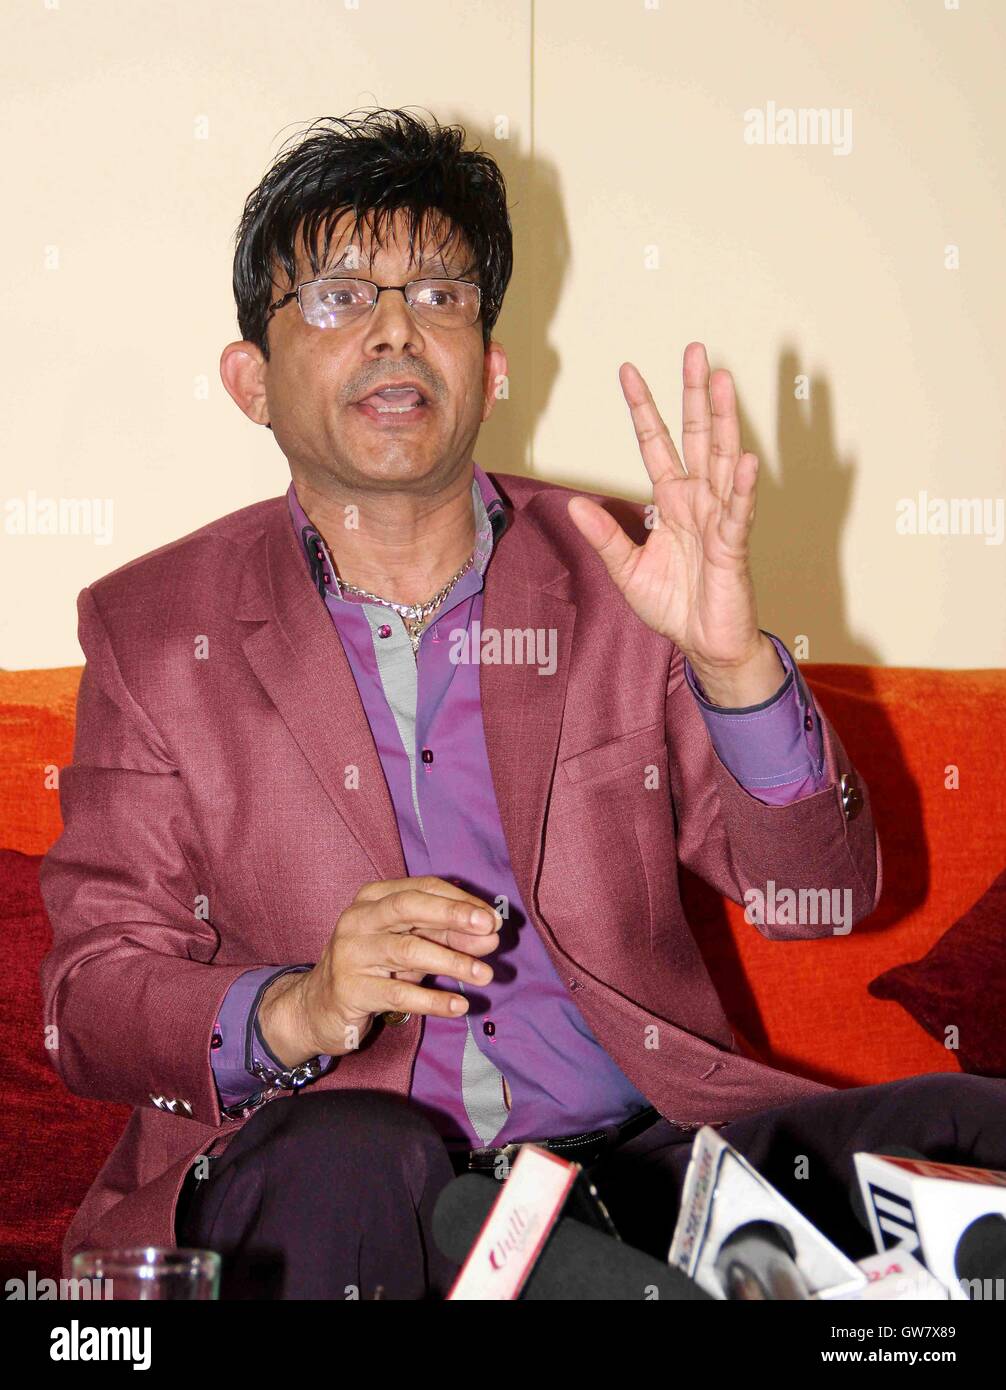 Bollywood actor filmmaker Kamaal Rashid Khan conference tlleged telephonic conversation bilmmaker Kumar Mangat Pathak mumbai Stock Photo